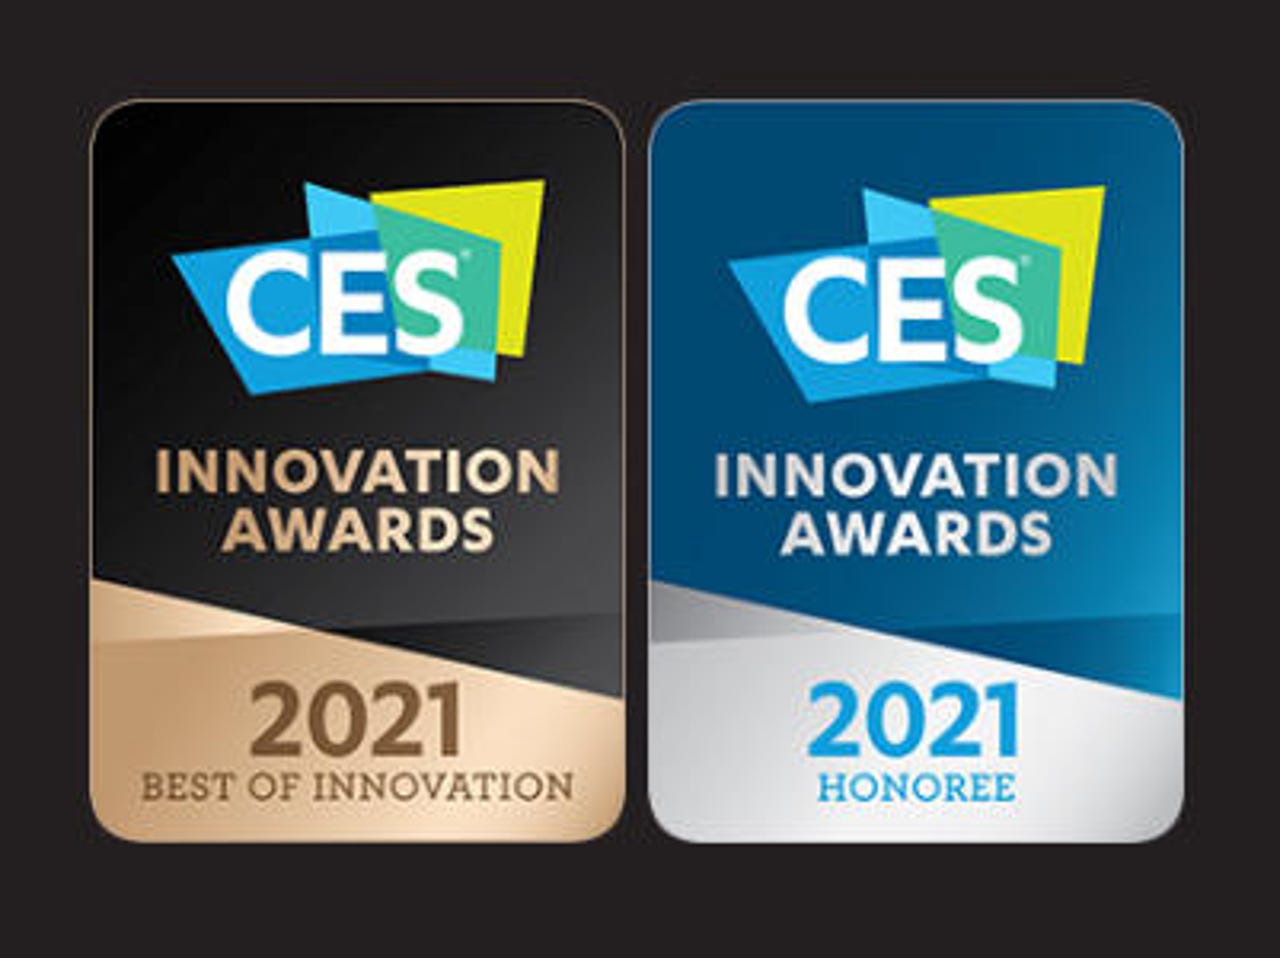 ces-innovation-awards-logo-thumb.jpg